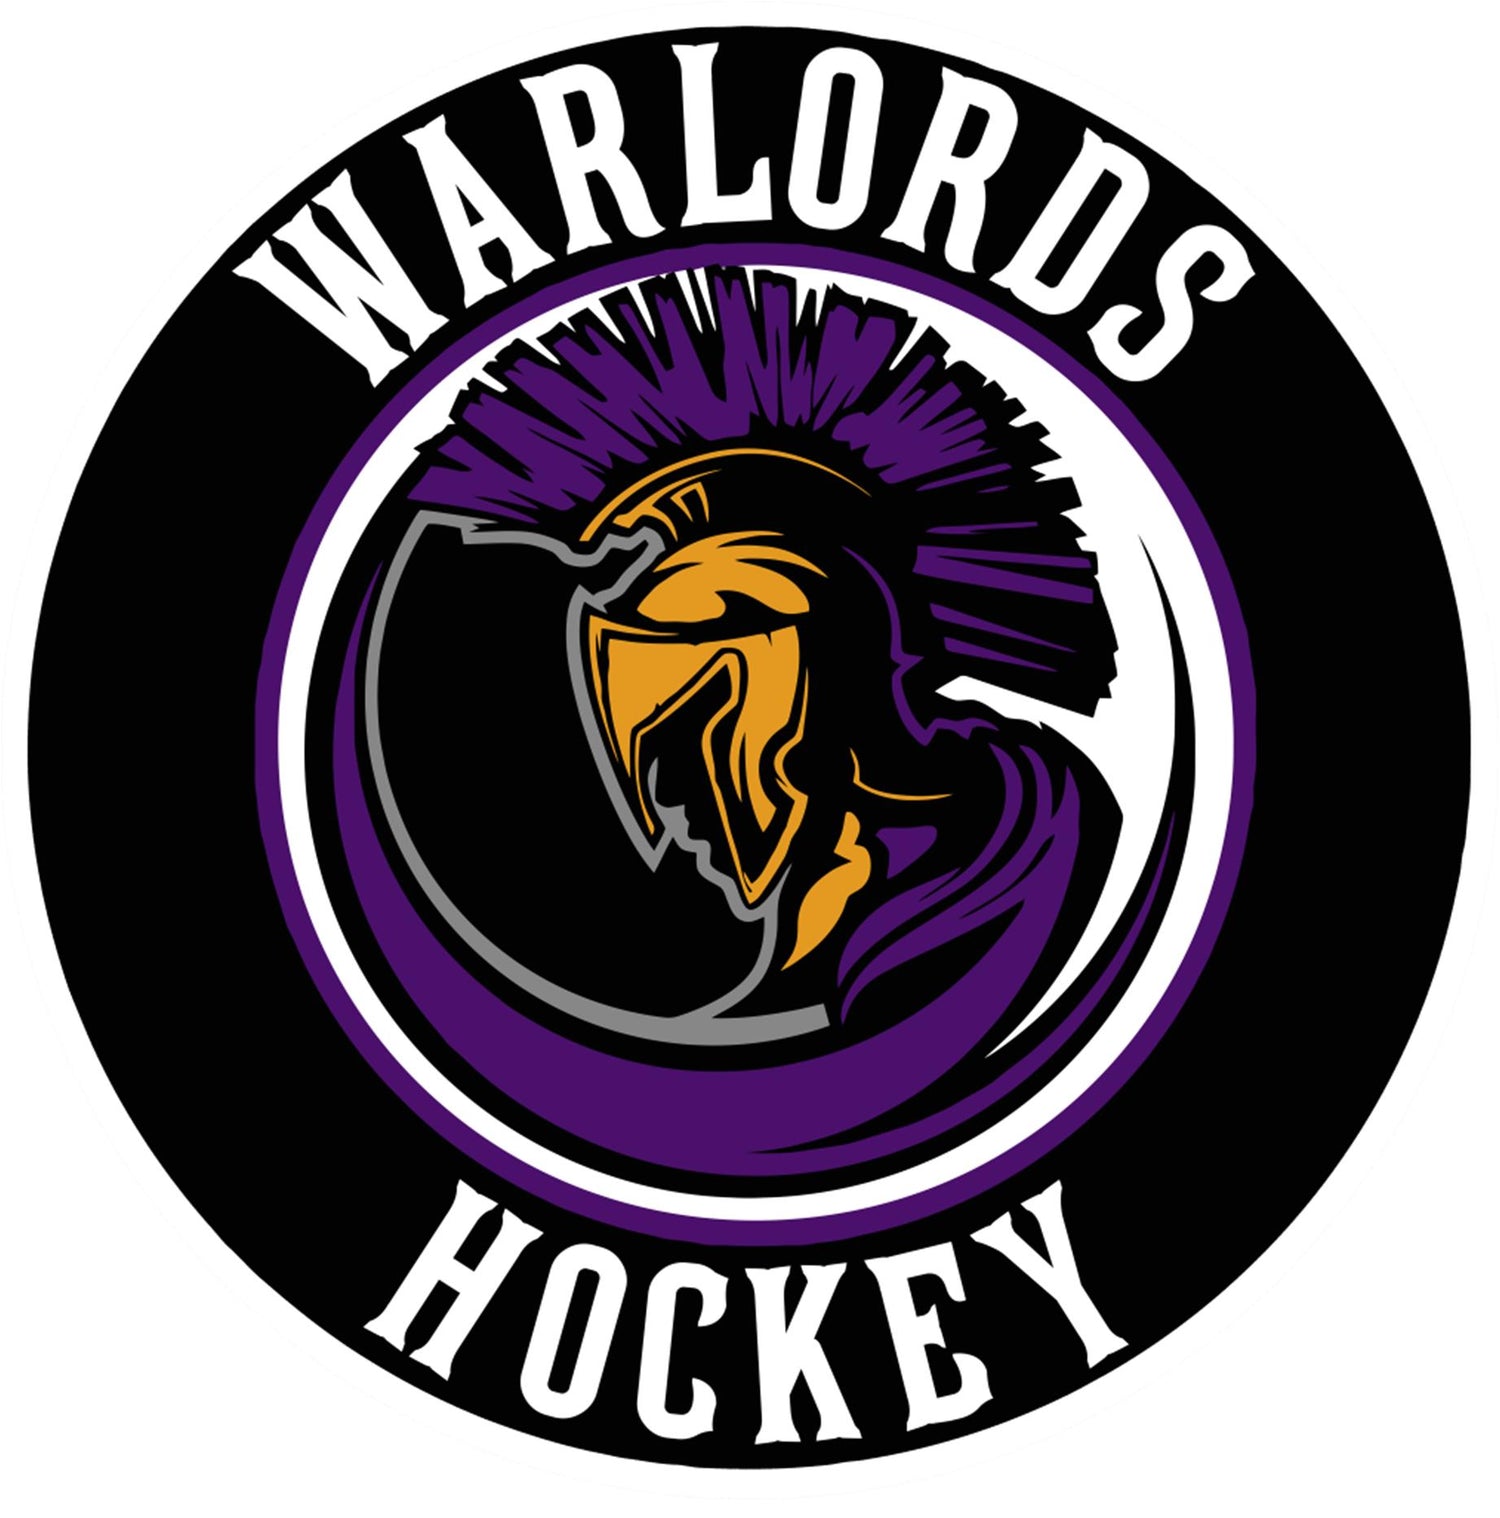 Warlords Hockey